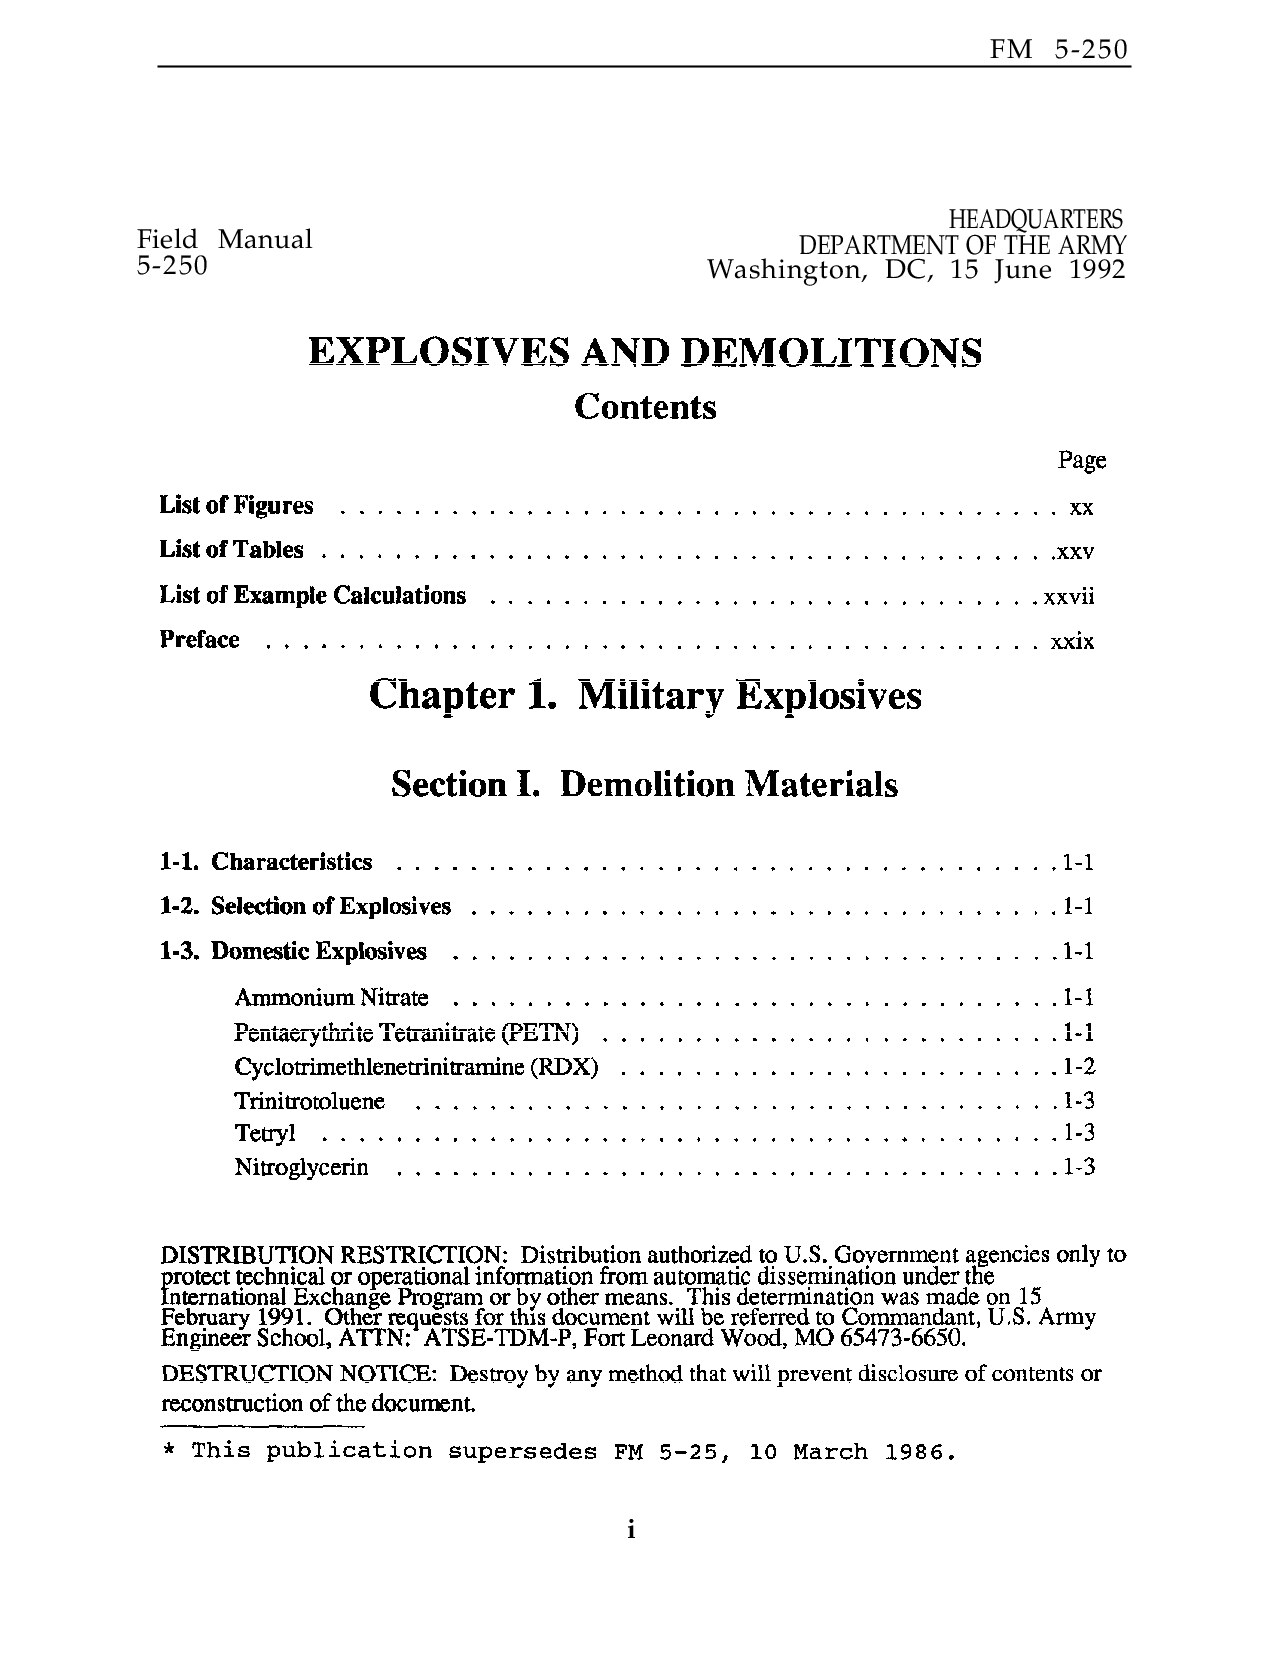 FM 5-250 Explosives and Demolitions 1992